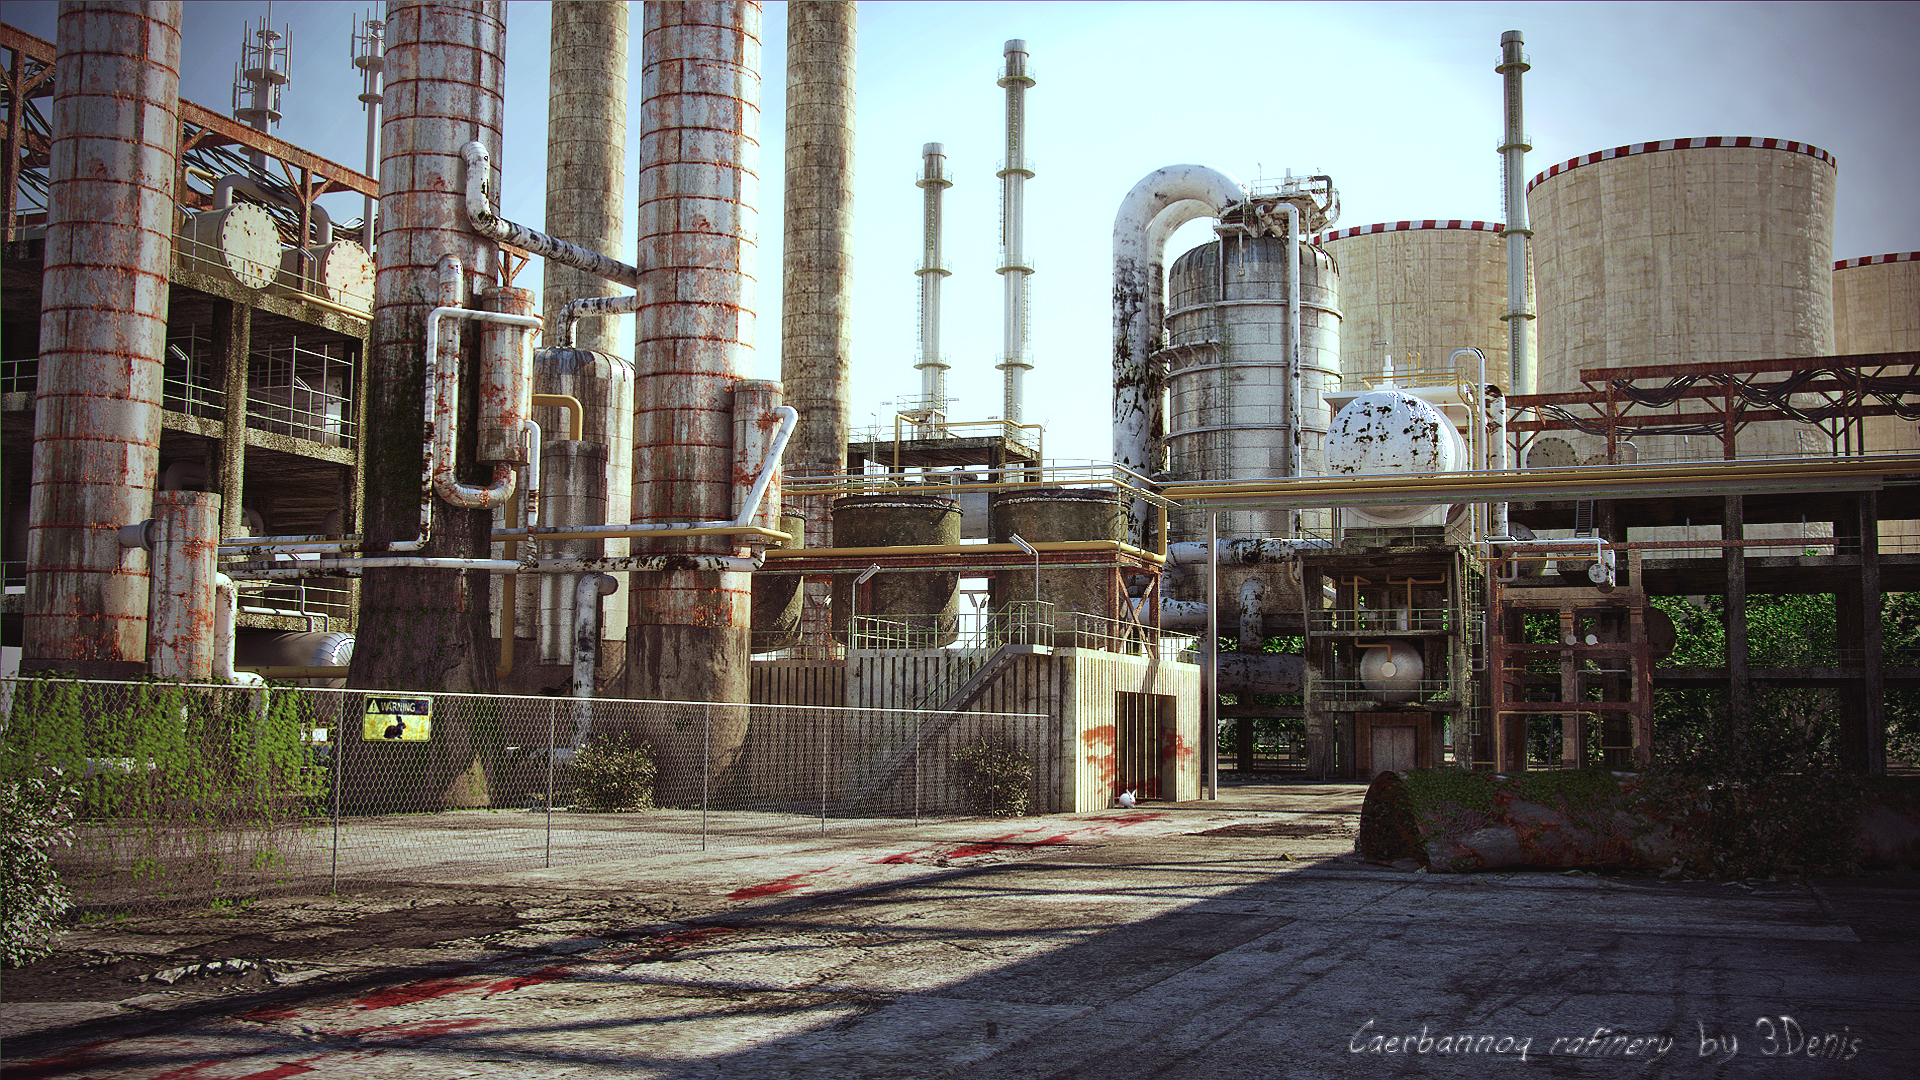 Caerbannog refinery by Denis Ivankovic